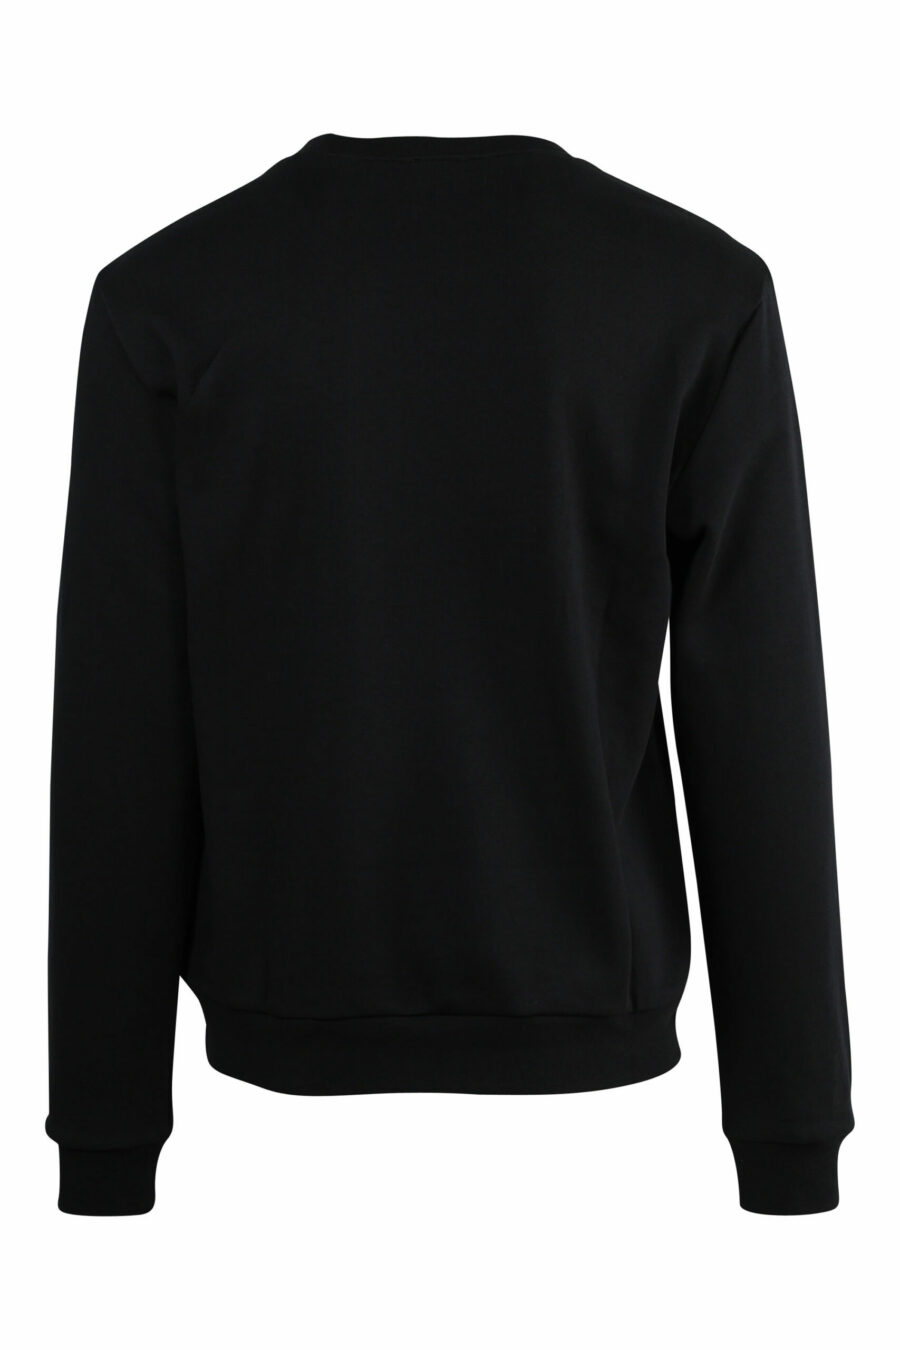 Sweatshirt noir avec maxilogo blanc "lux identity" - 8057767667085 scaled